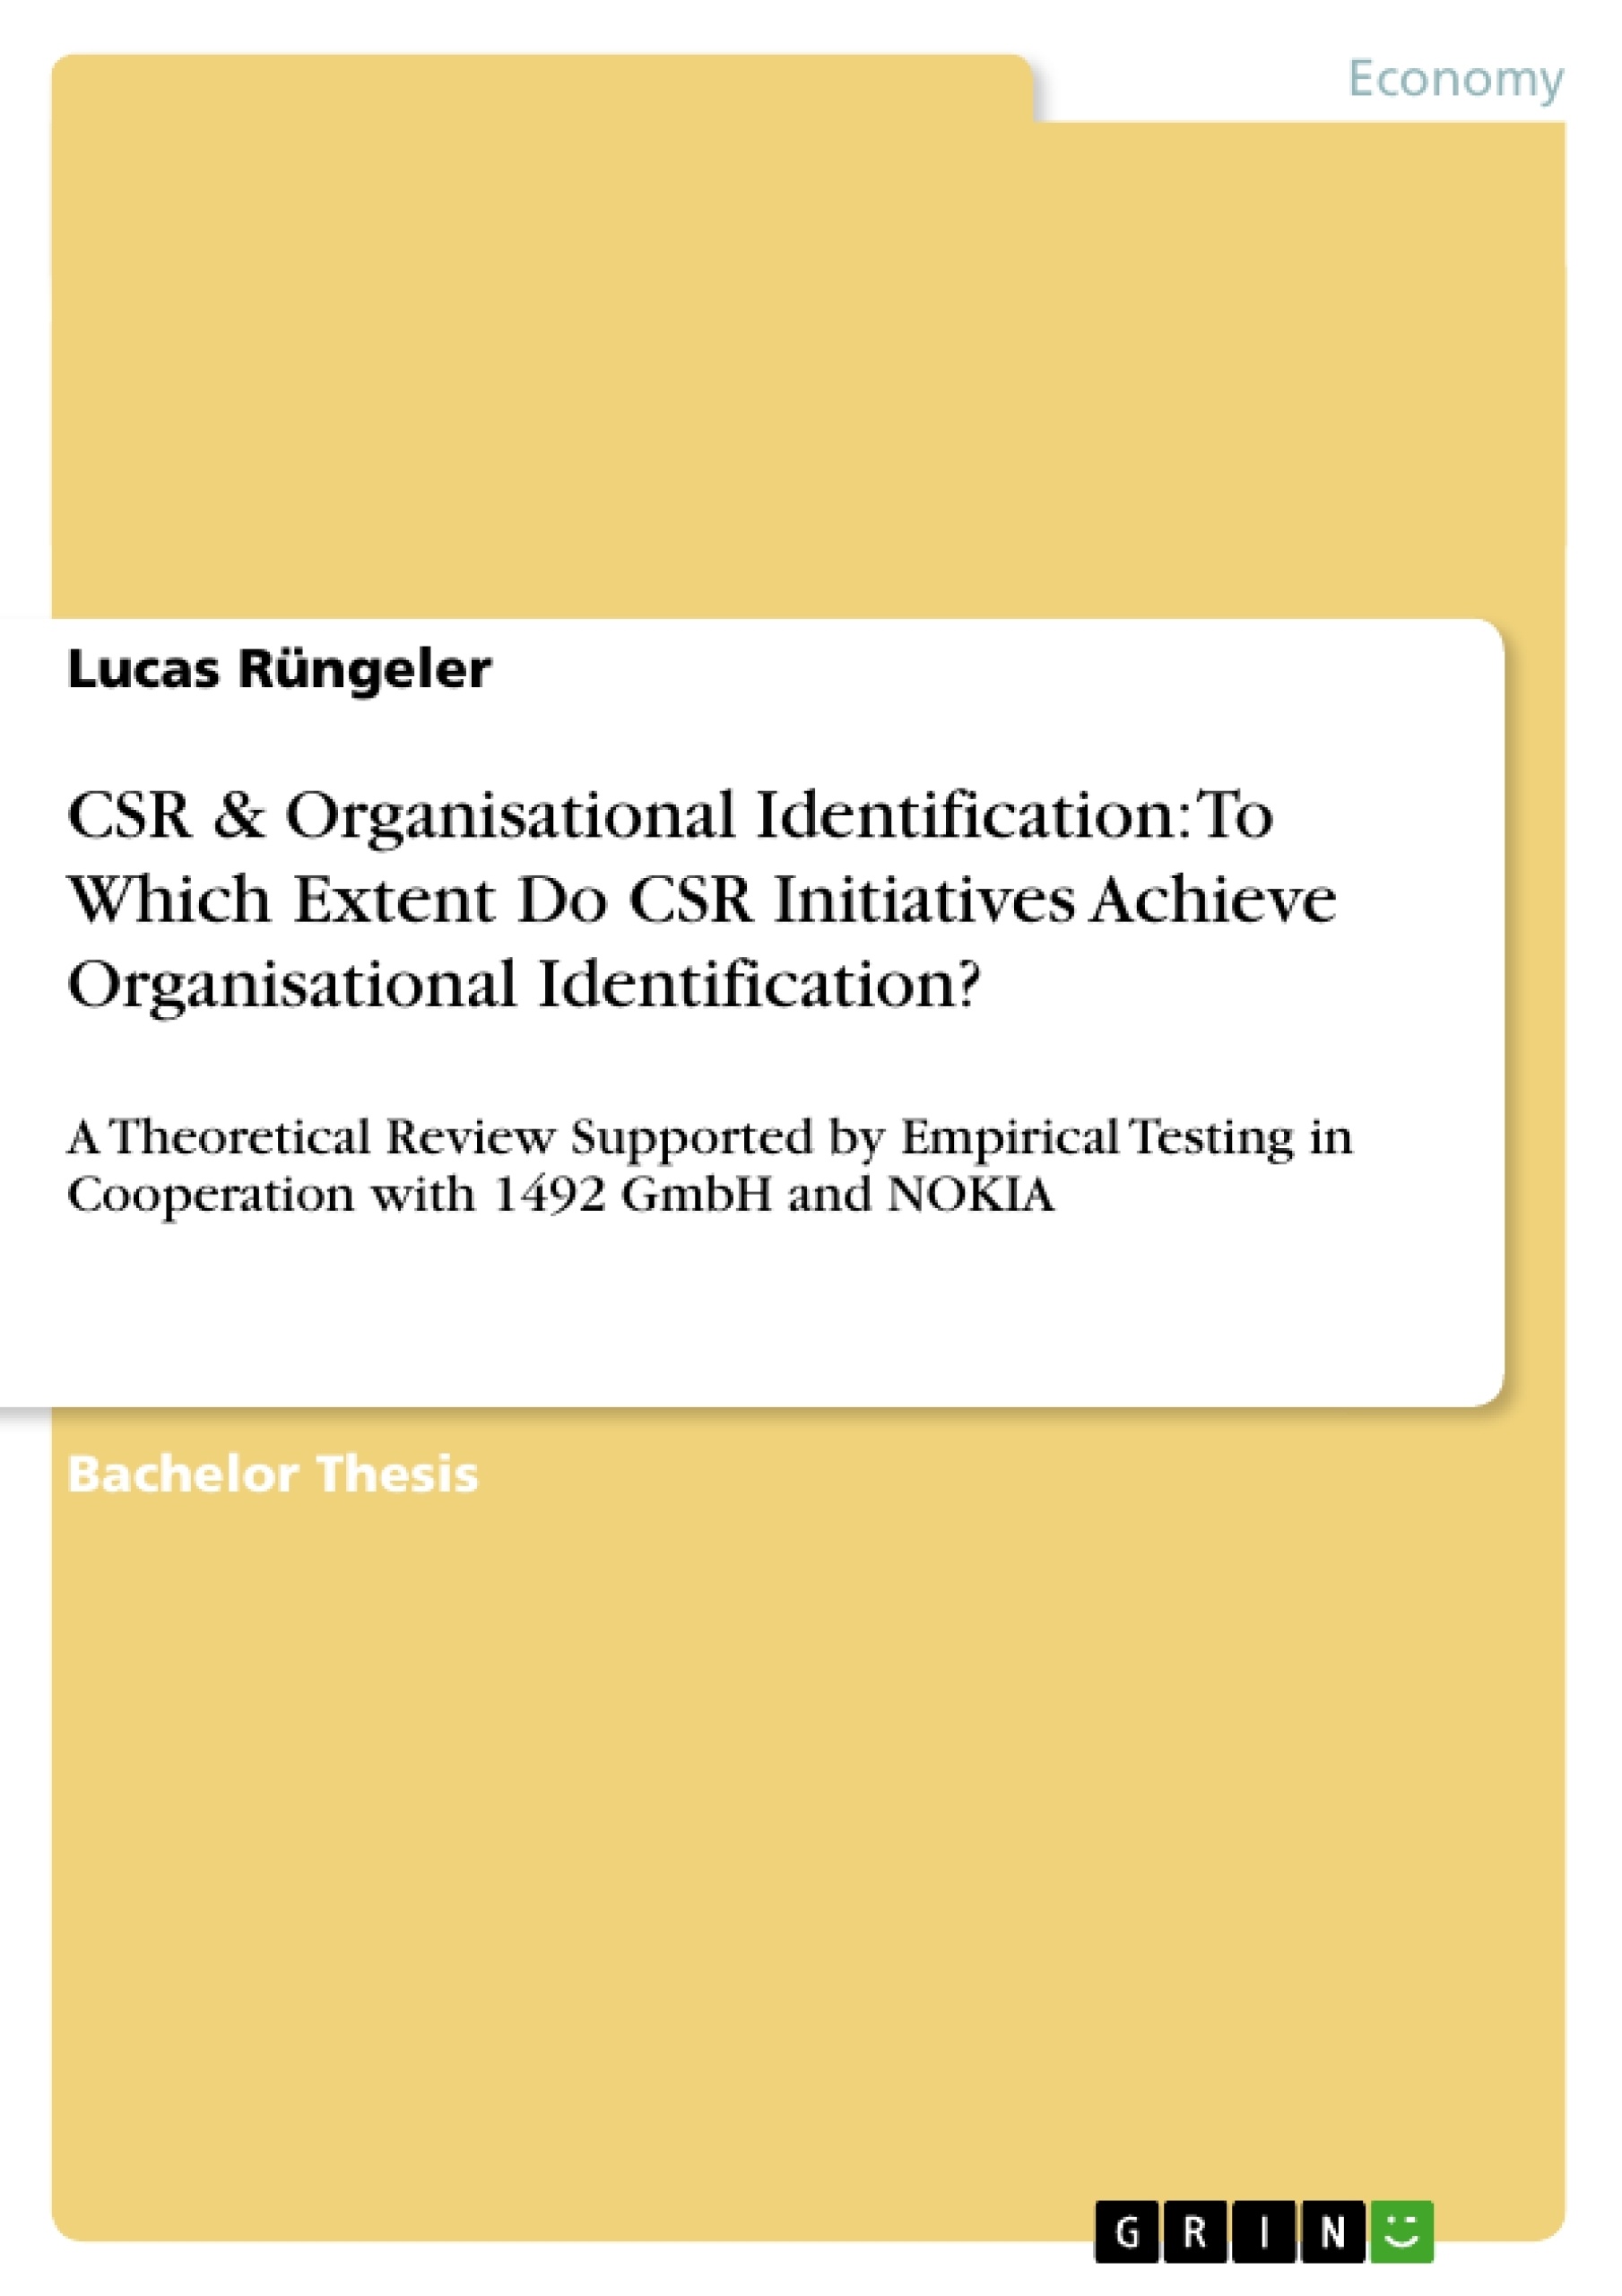 Title: CSR & Organisational Identification: To Which Extent Do CSR Initiatives Achieve Organisational Identification?